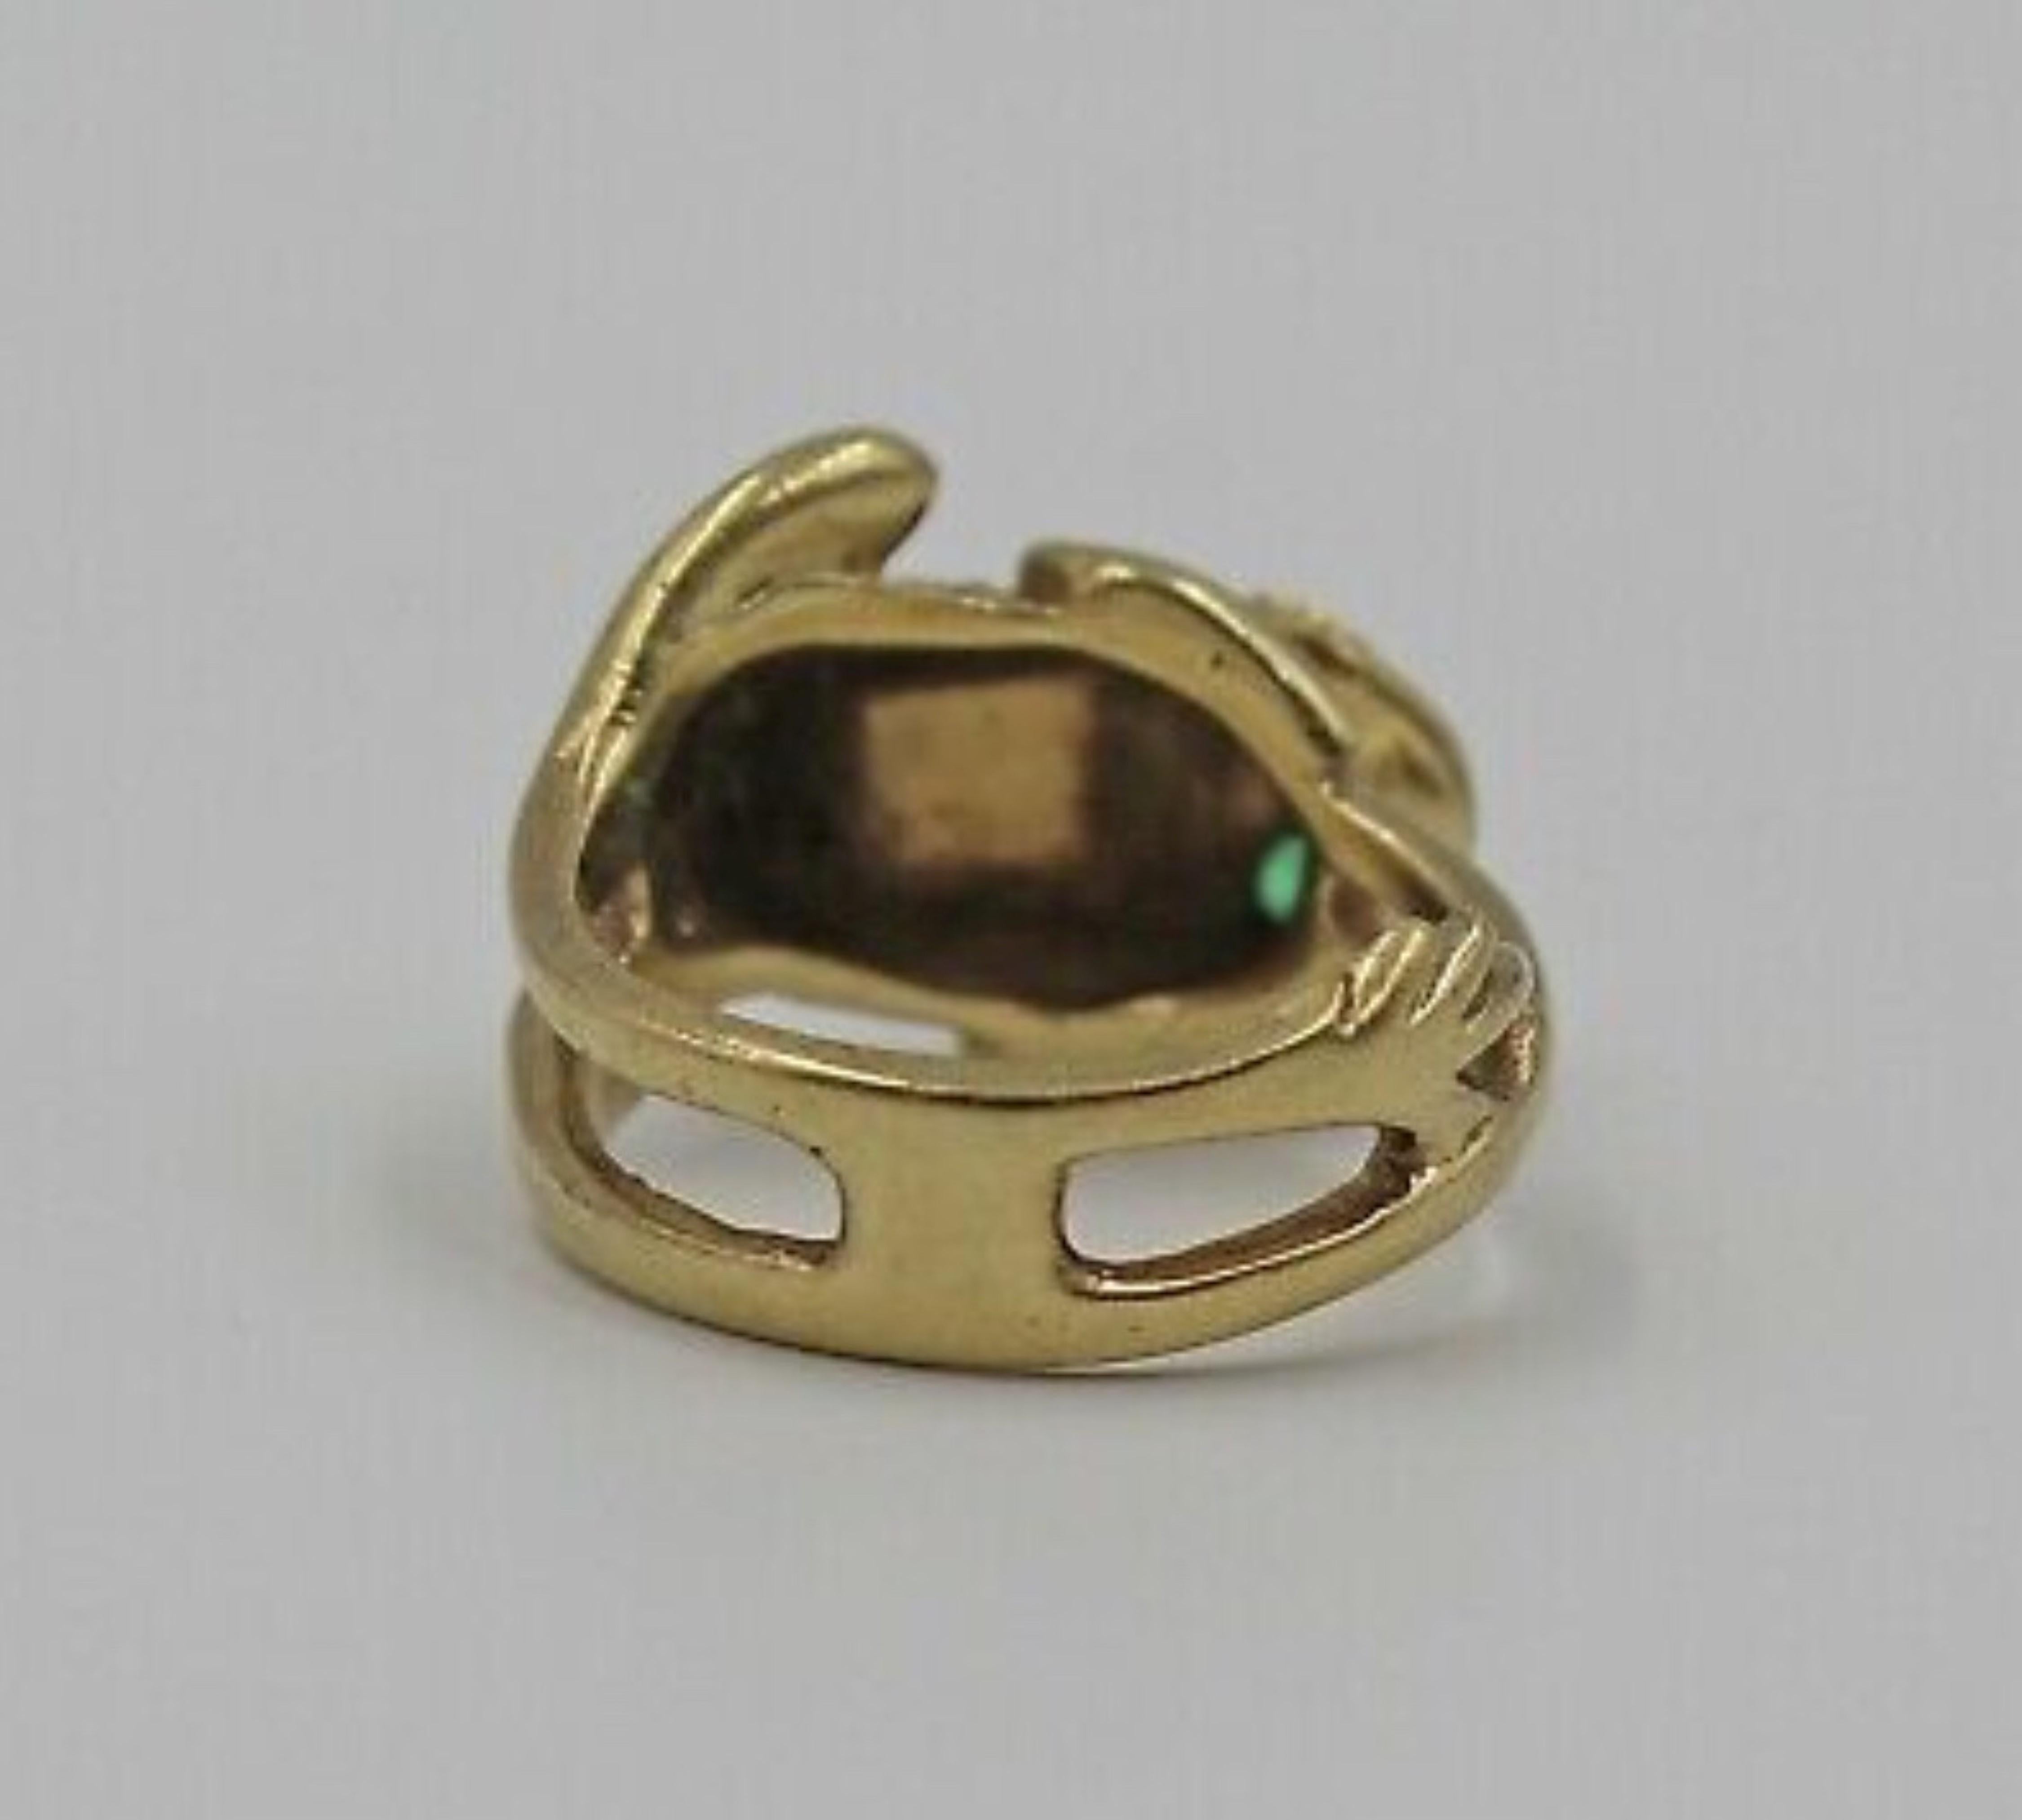 Vintage 14 Karat Gold Frog Ring with Emerald Eyes 1